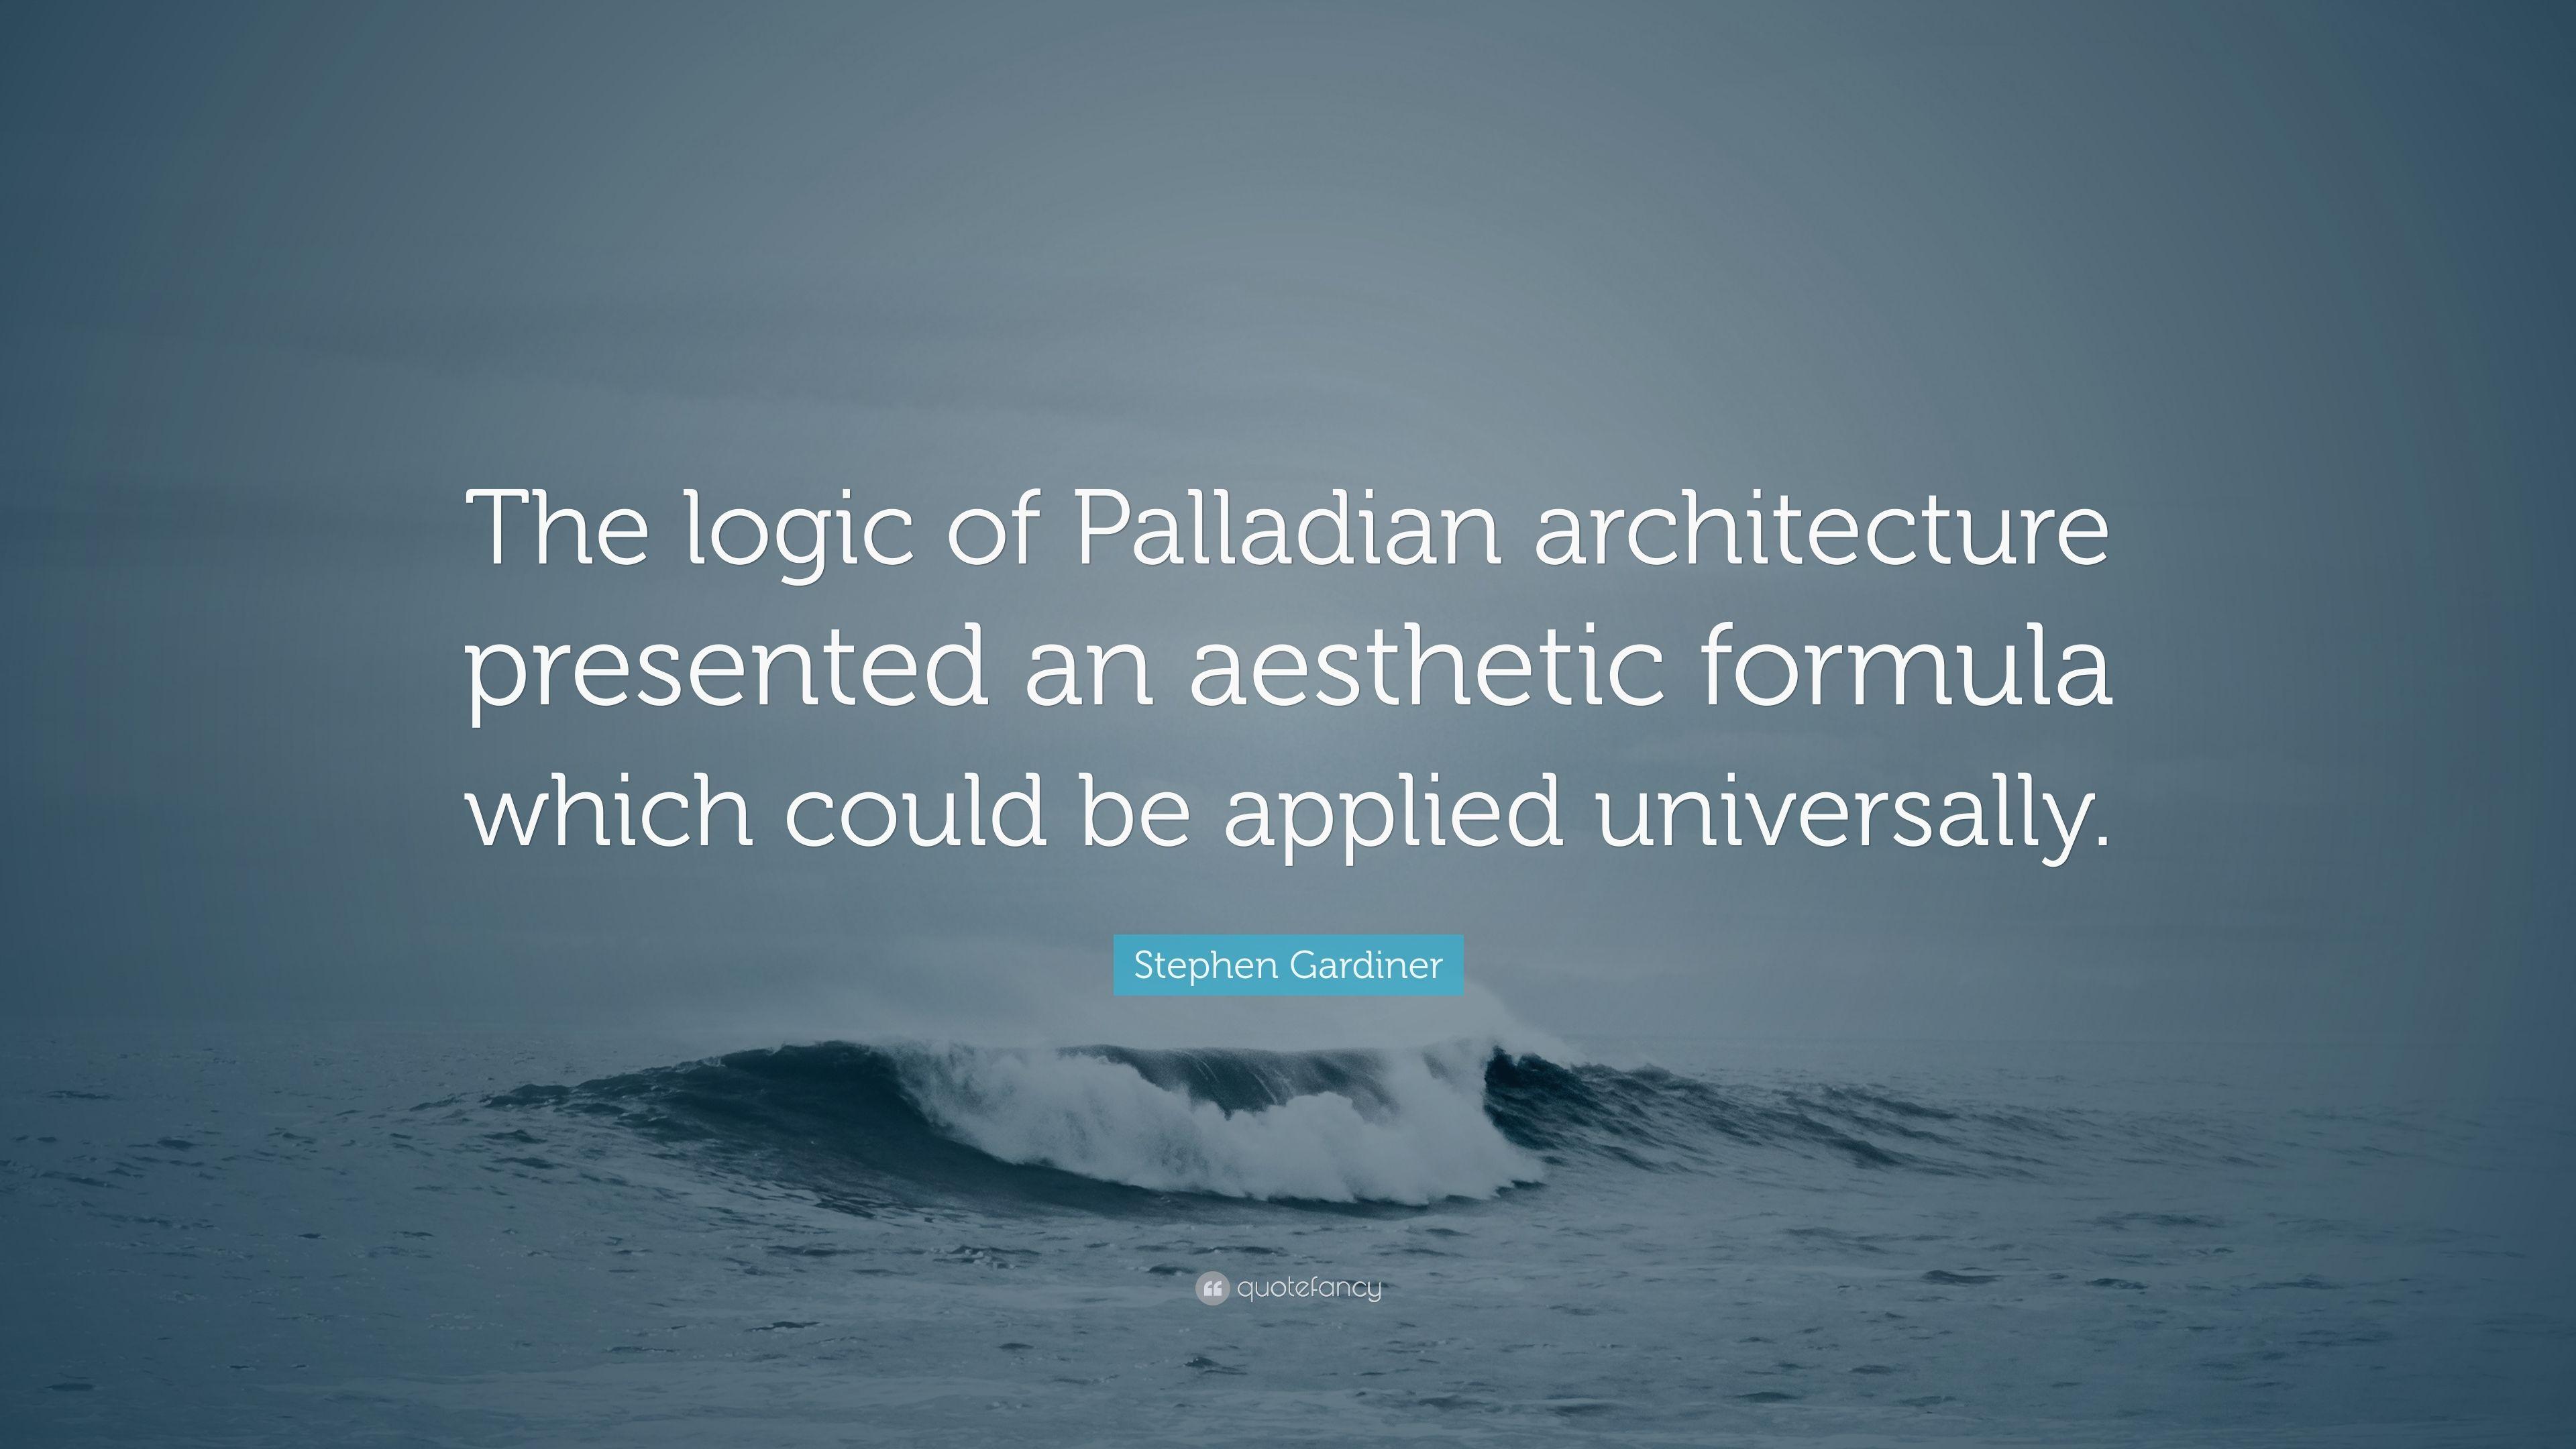 Stephen Gardiner Quote: “The logic of Palladian architecture